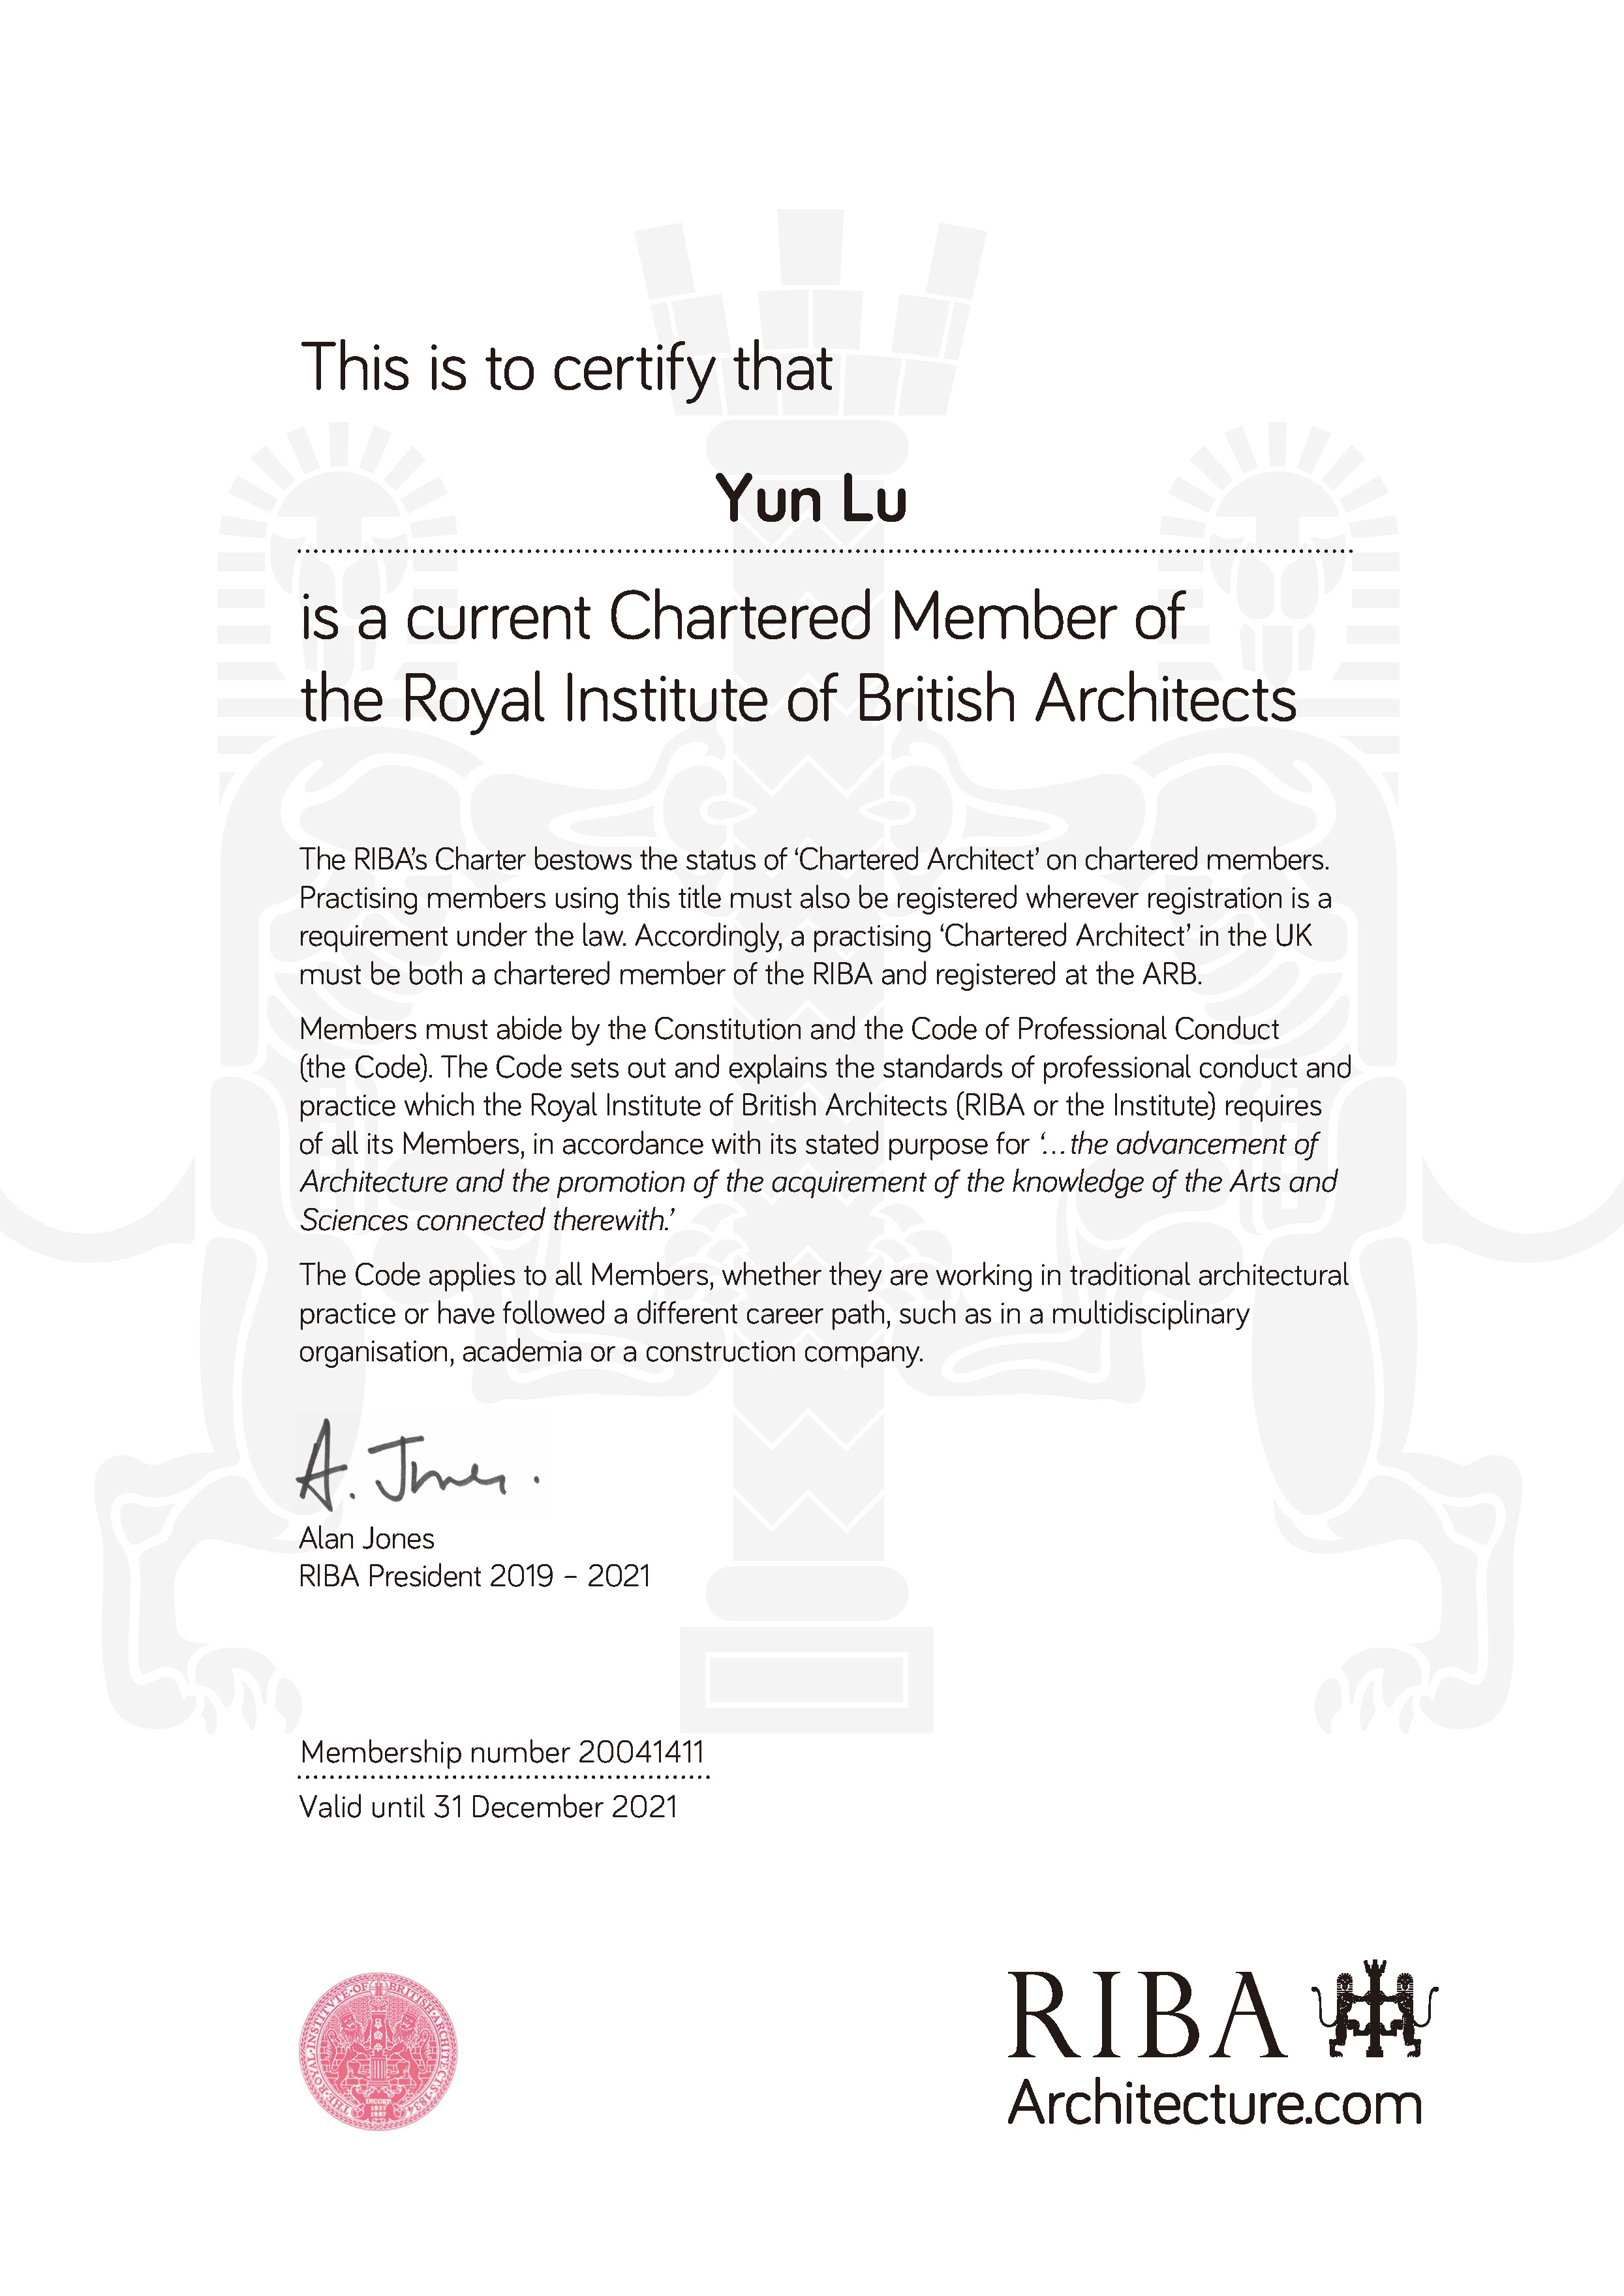 成都慕达建筑事务所卢昀先生RIBA证书_The RIBA certificate of Lu Yun, founding partner and principal architect of MUDA architecture firm